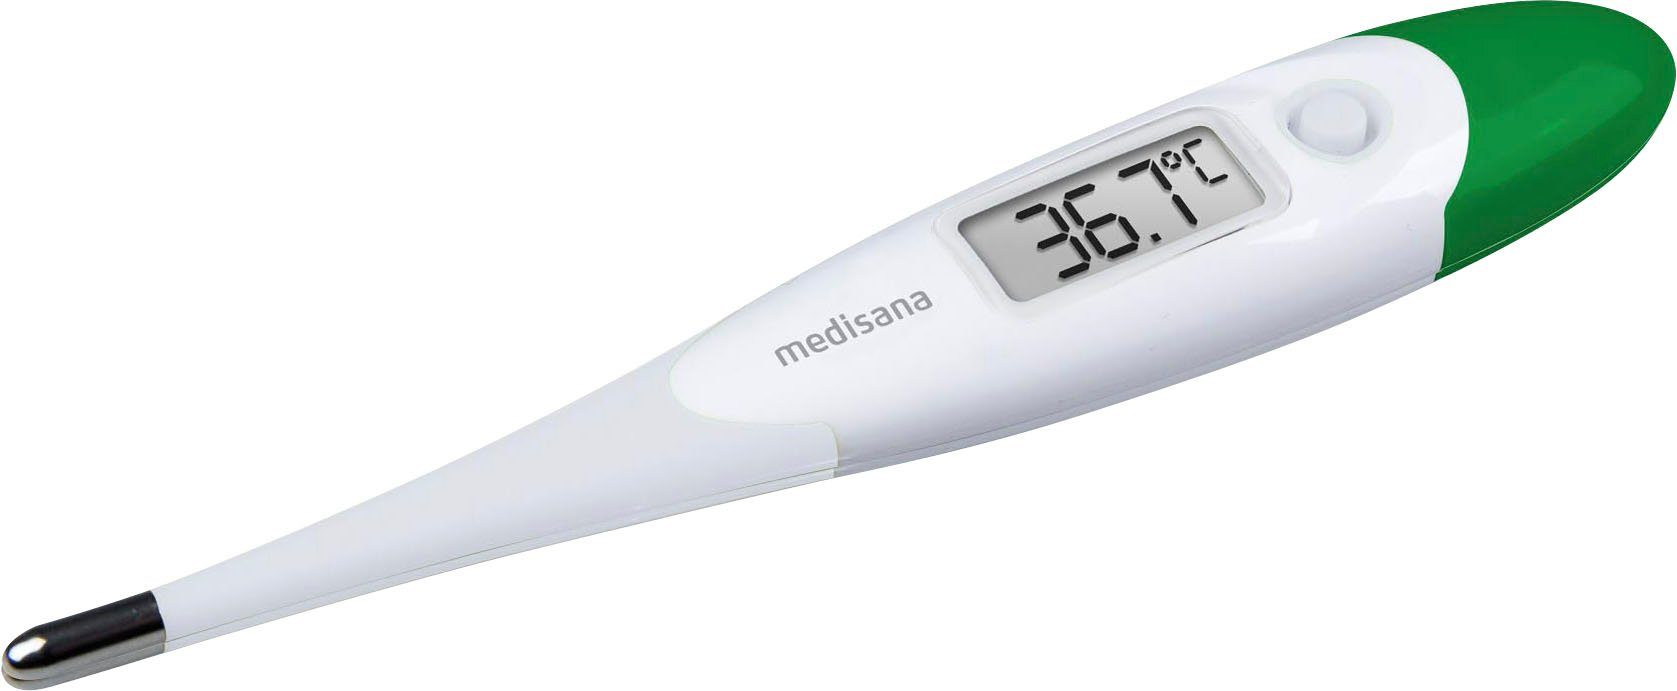 Fieberthermometer TM700 Medisana